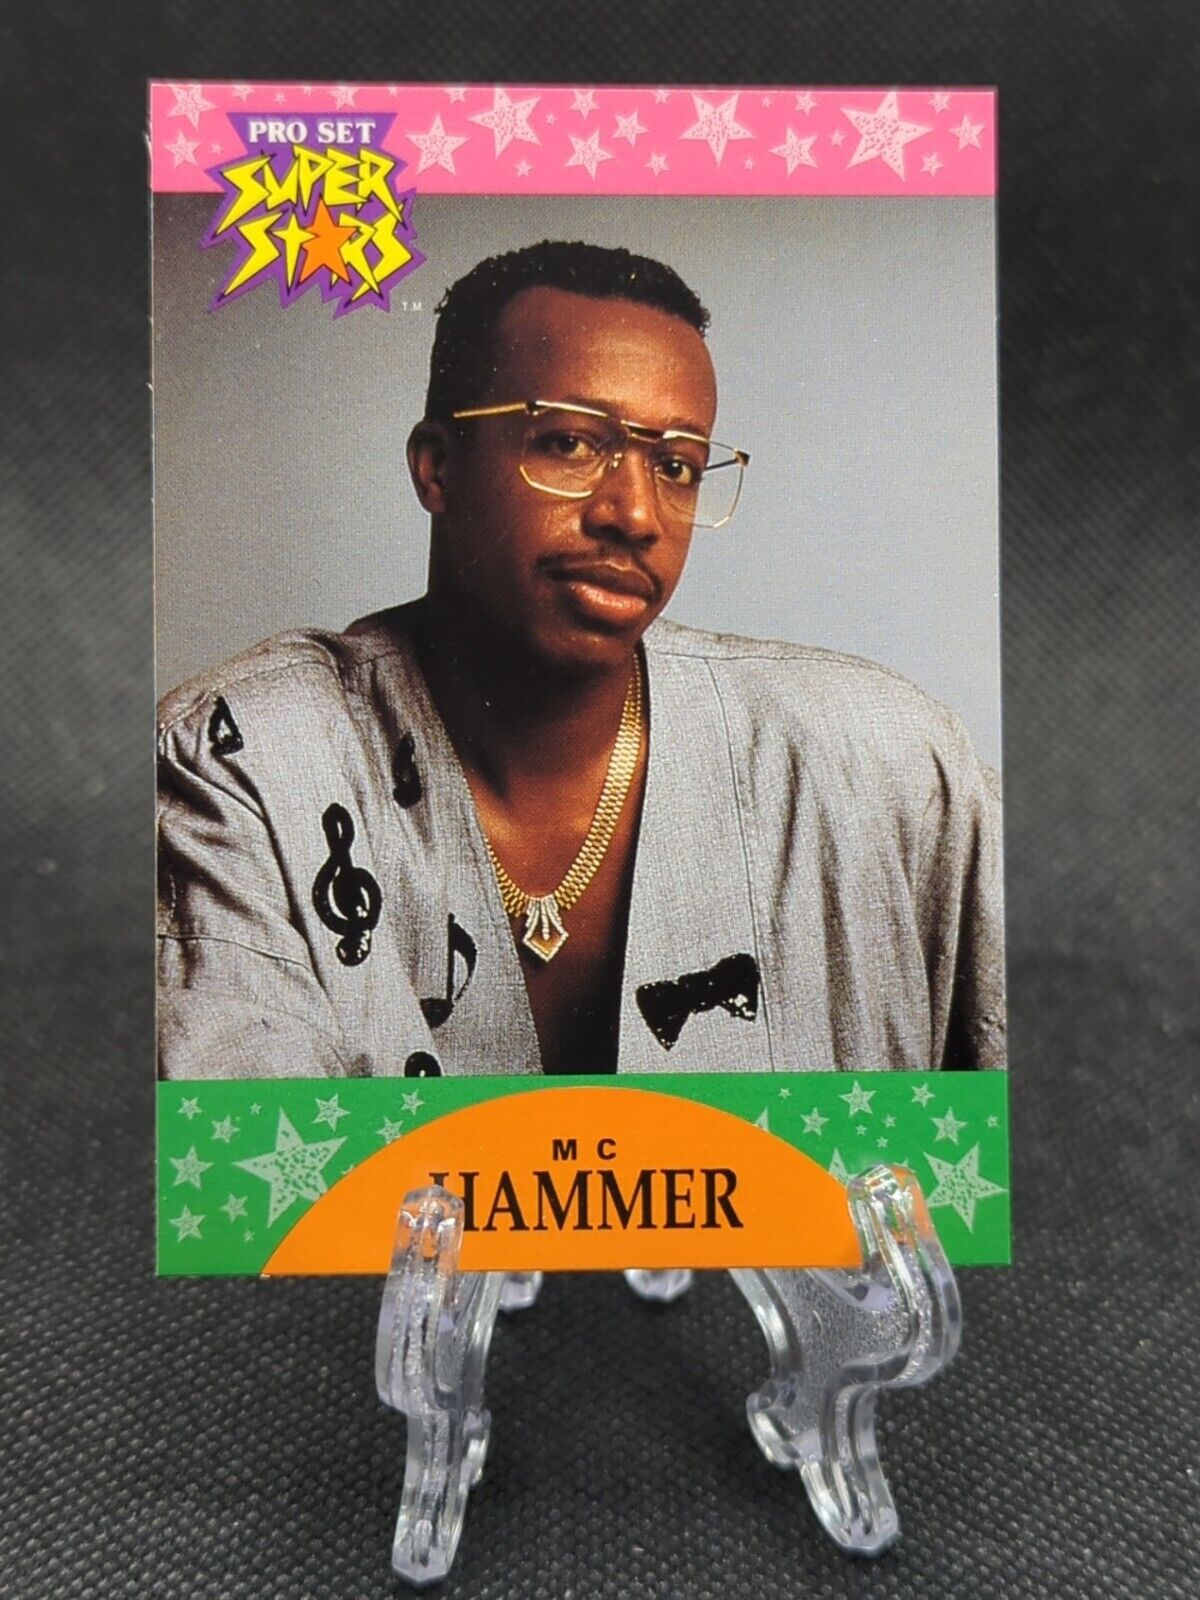 1991 Pro Set Super Stars Music Cards MC Hammer Promo #3